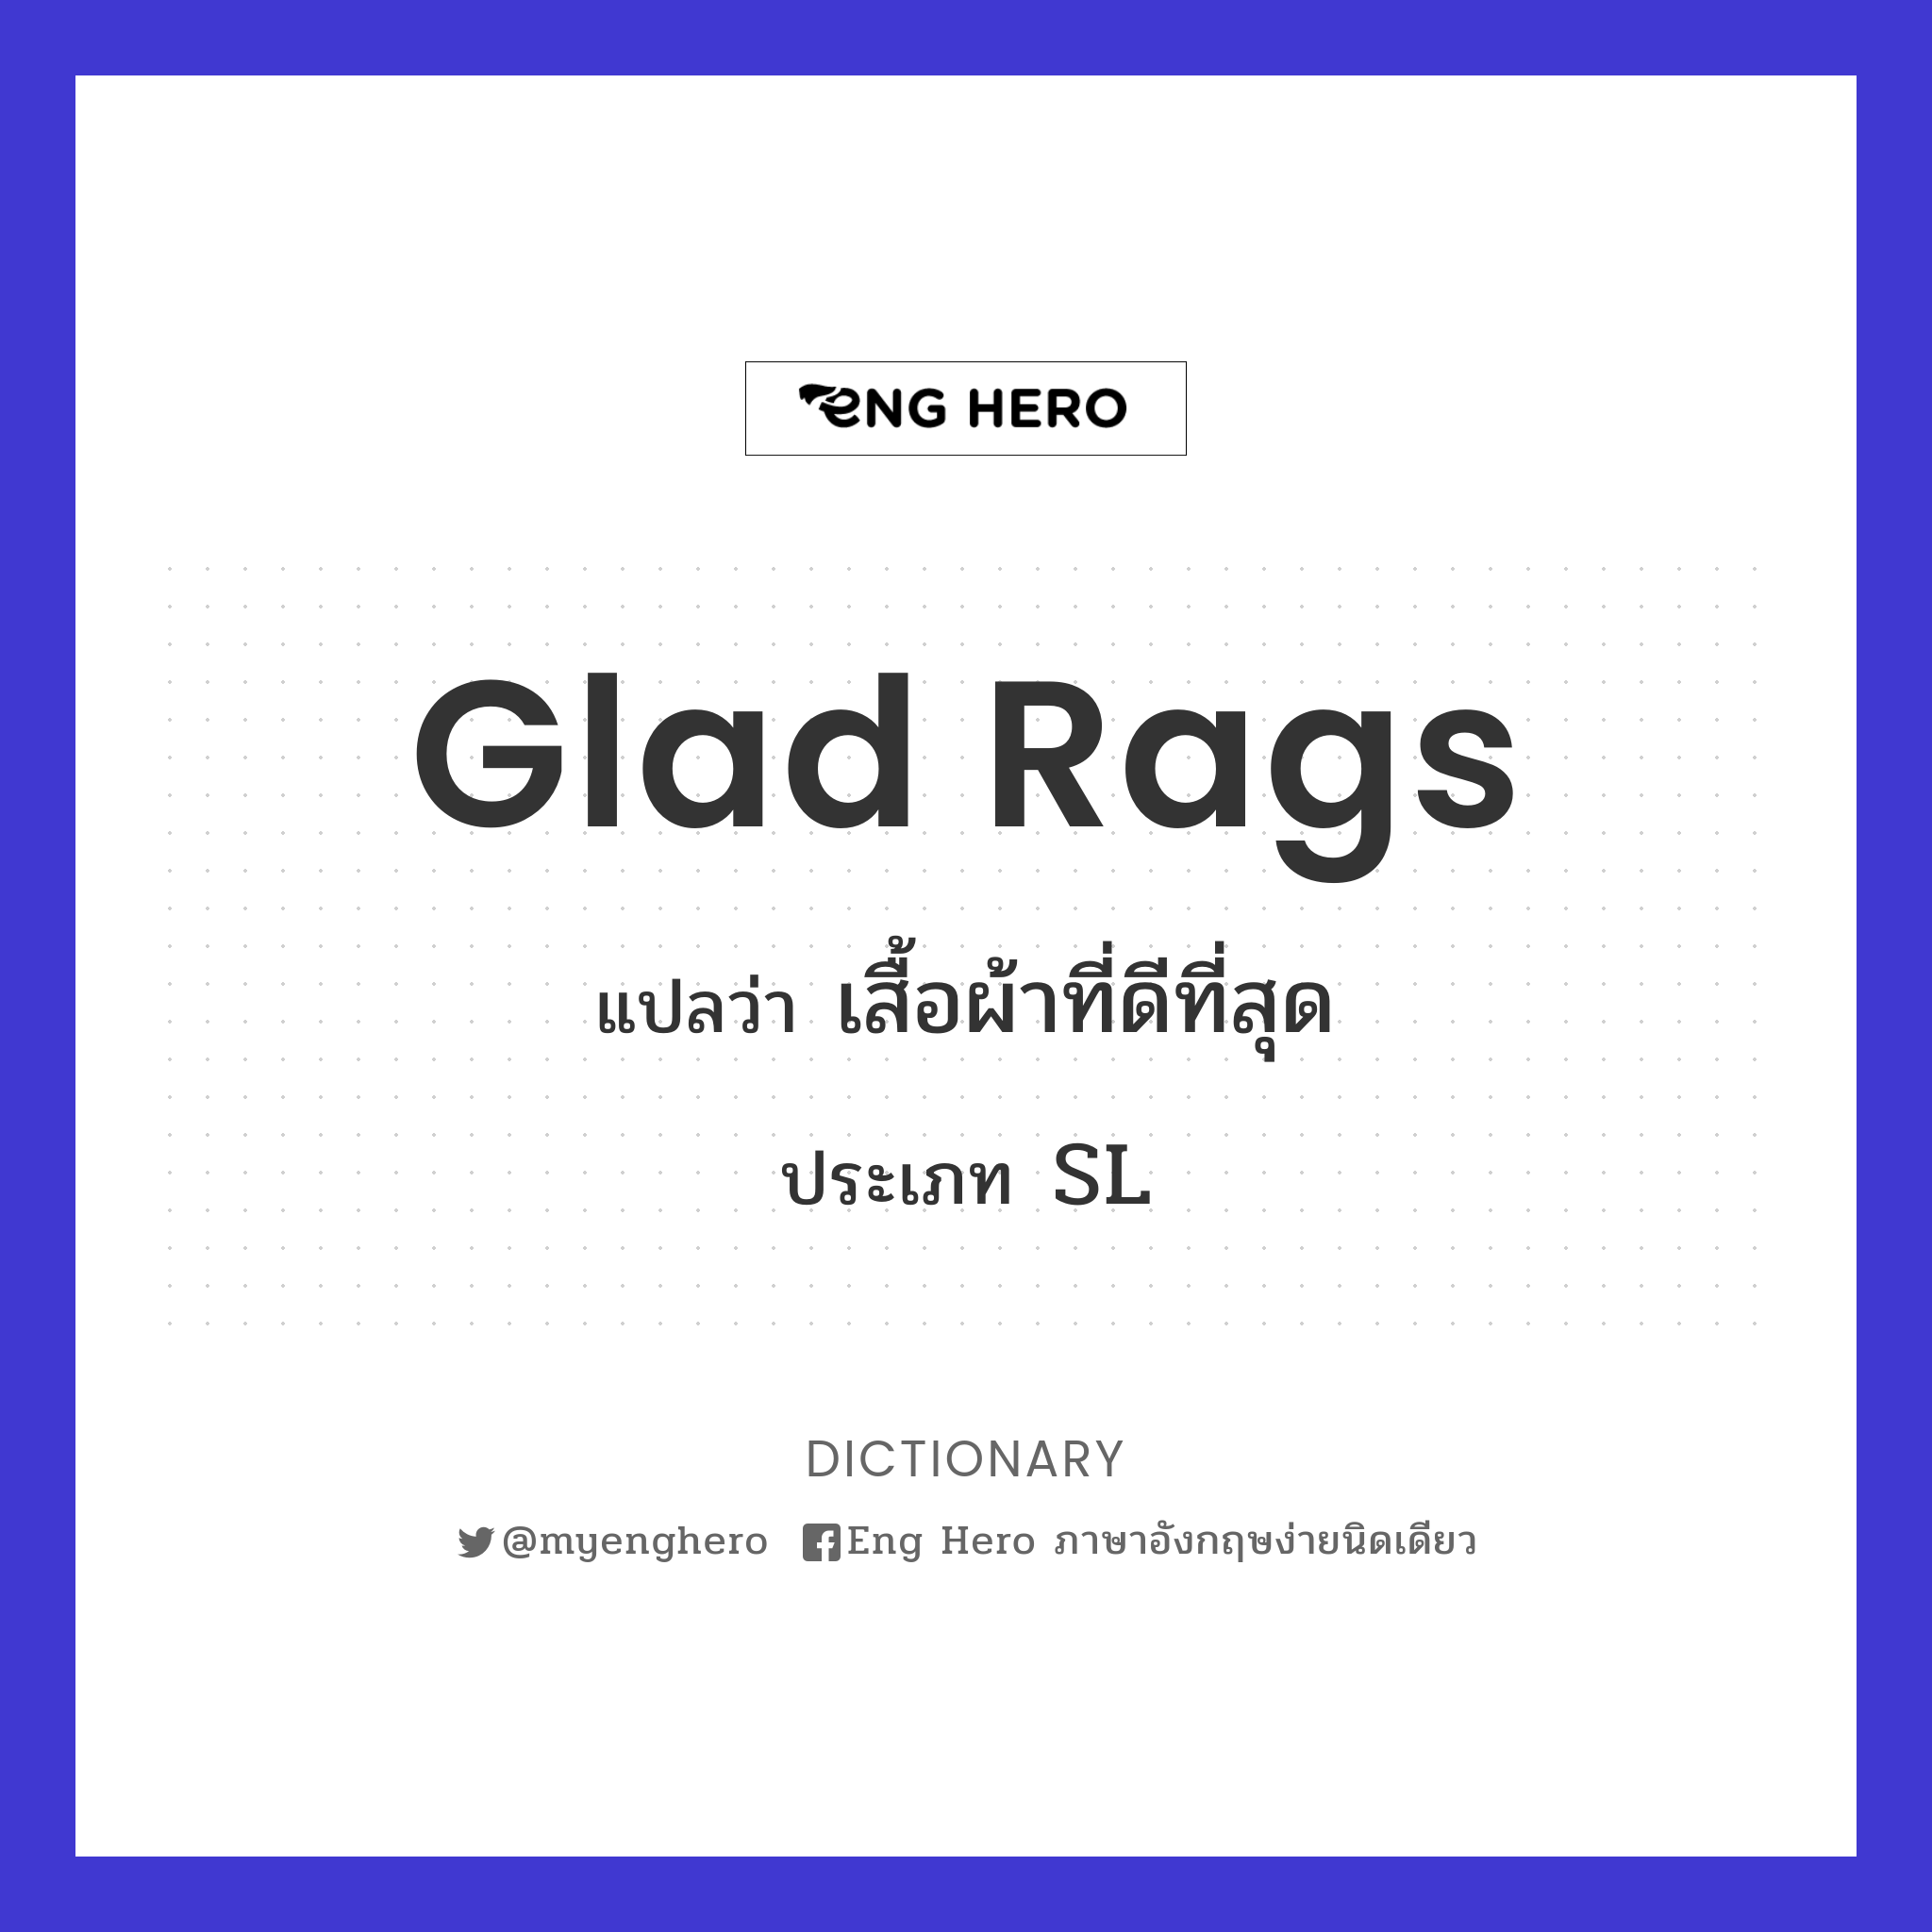 glad rags